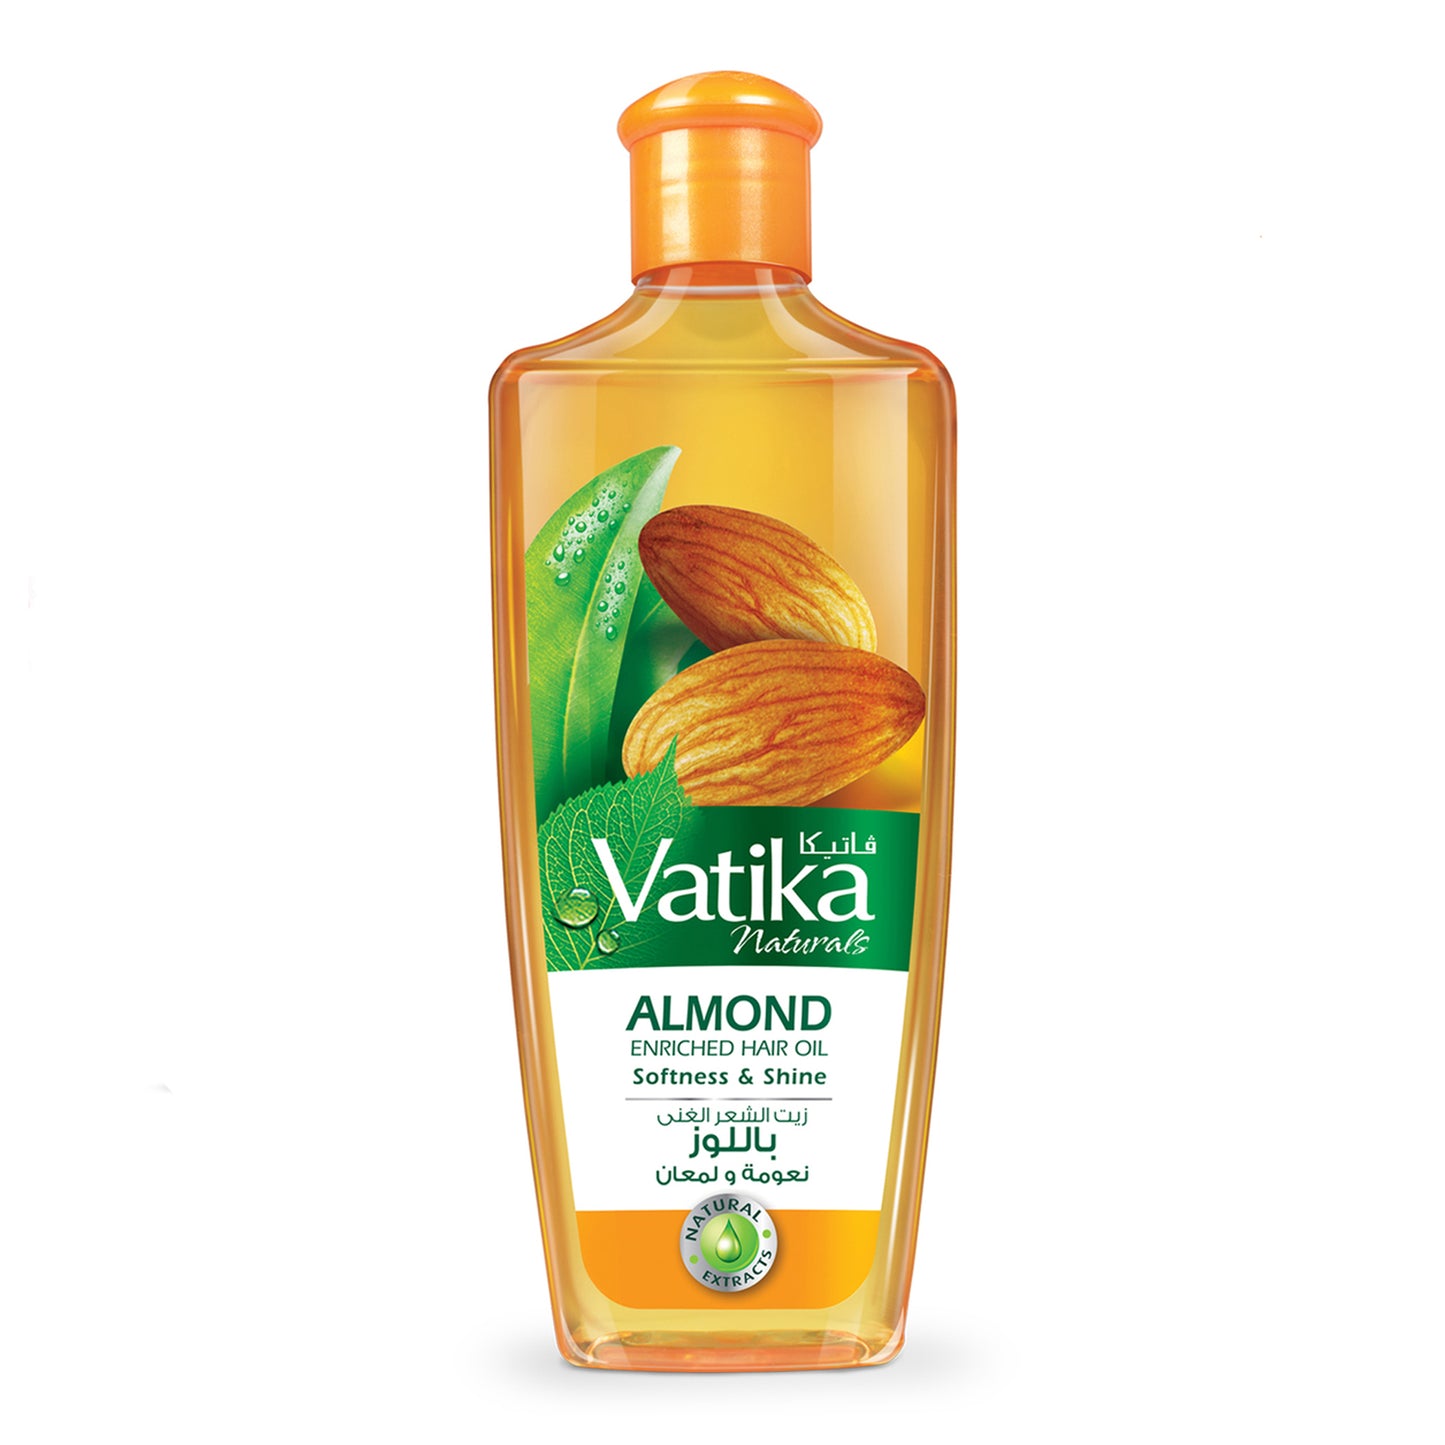 VATIKA - ALMOND ENRICHED HAIR OIL FOR SOFTNESS & SHINE - 200ML